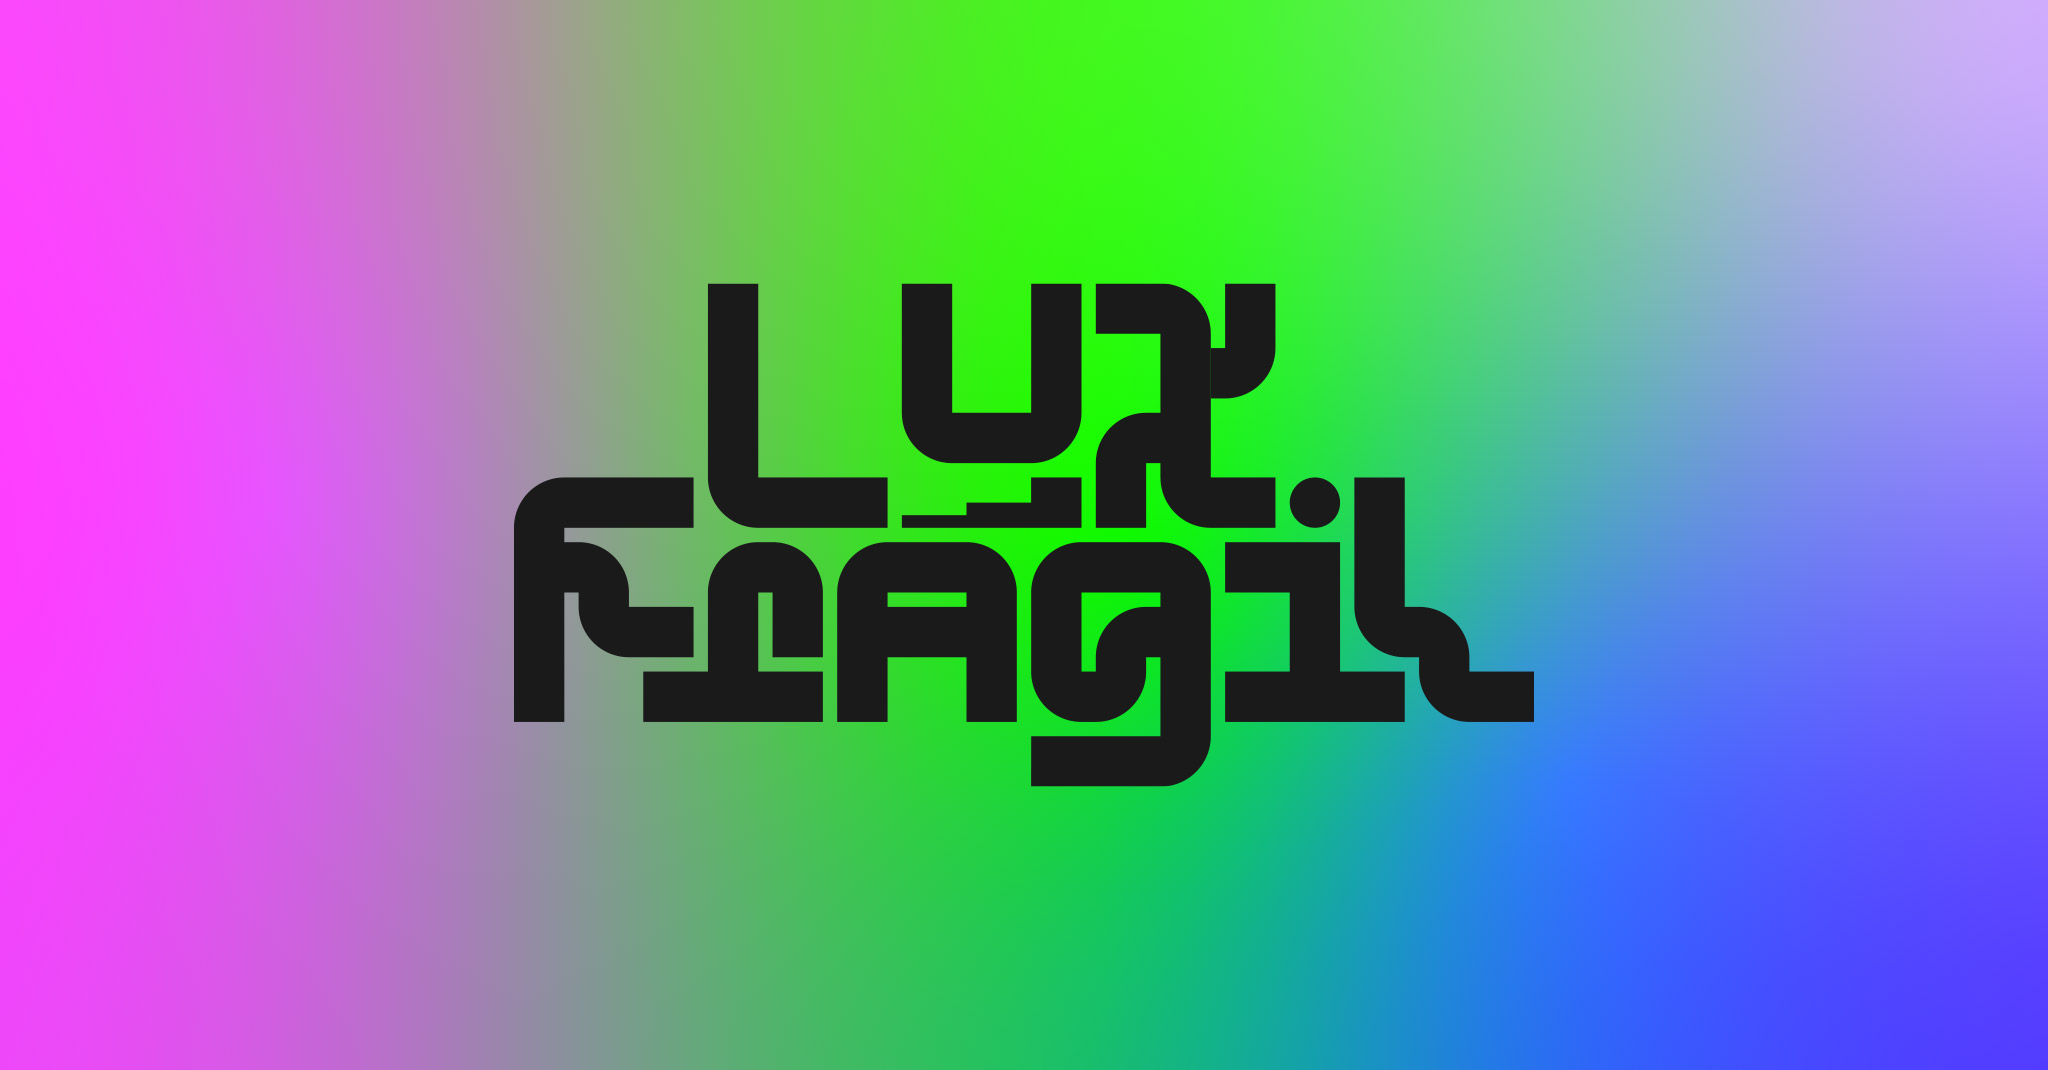 (c) Luxfragil.com